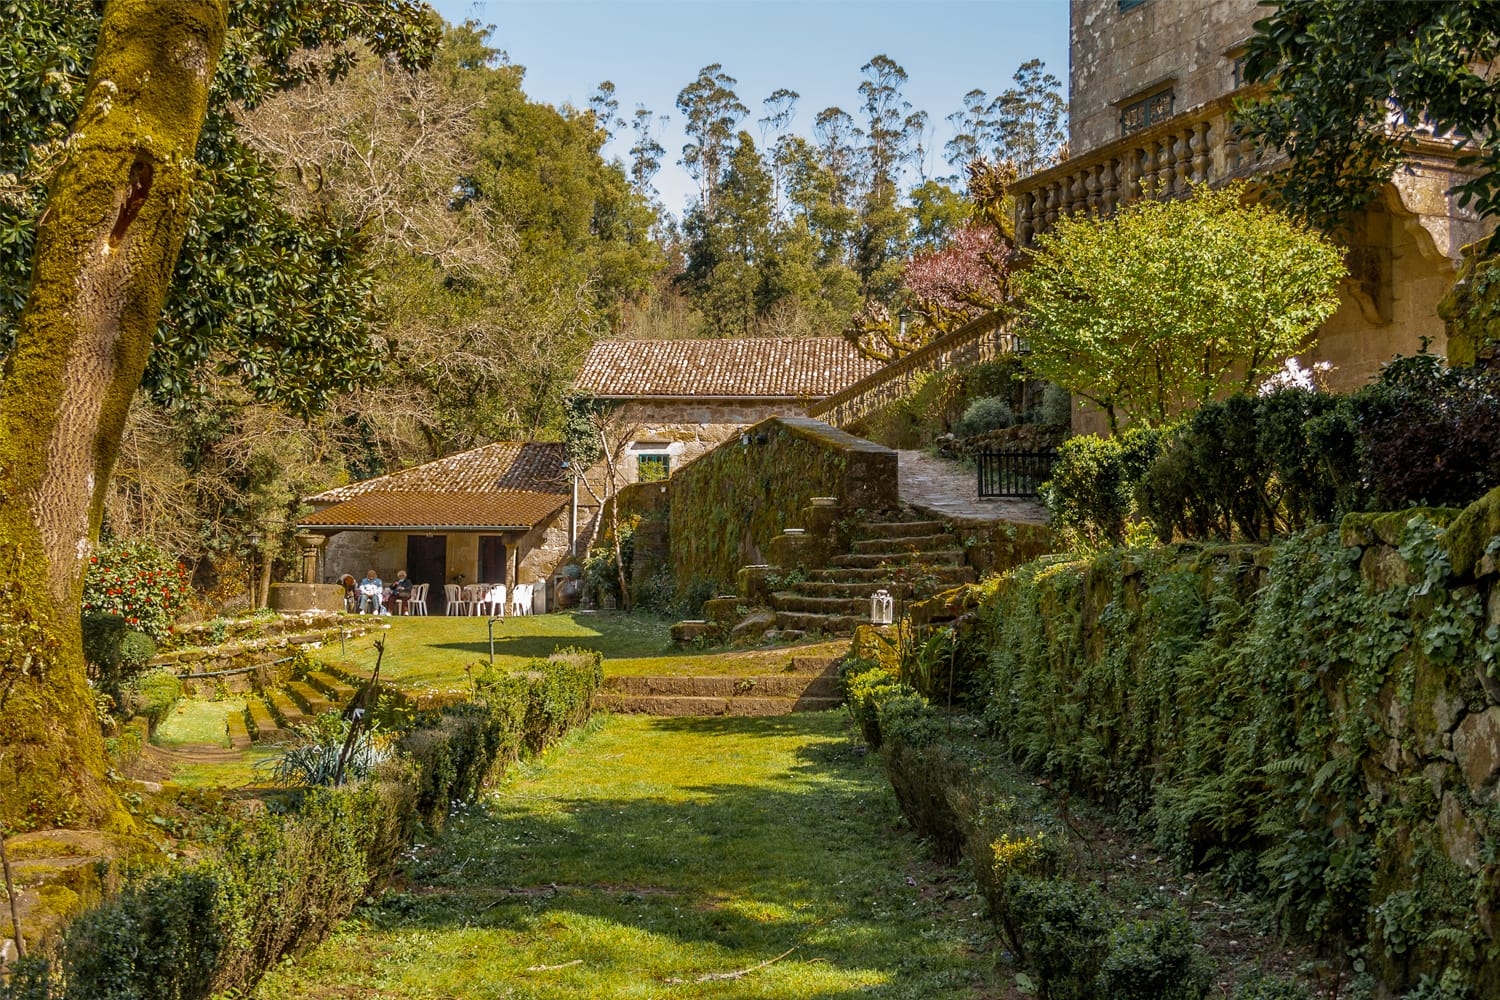 Faramello Palace in Galicia, Spain